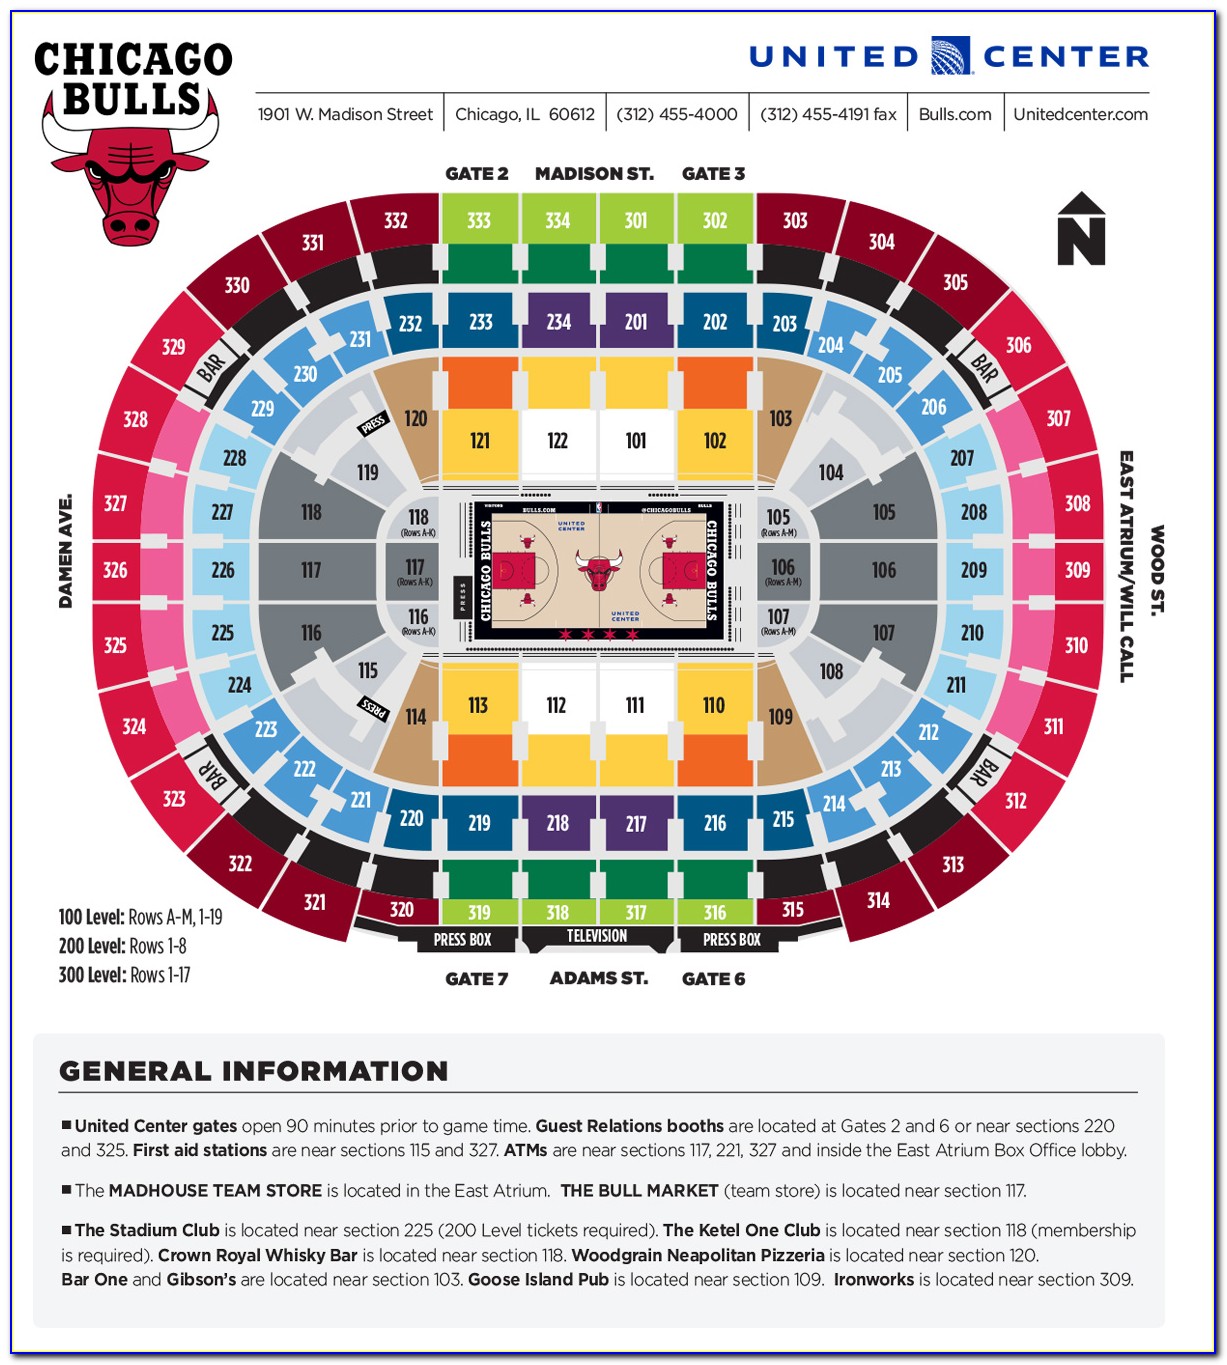 United Center Bulls Seating Map